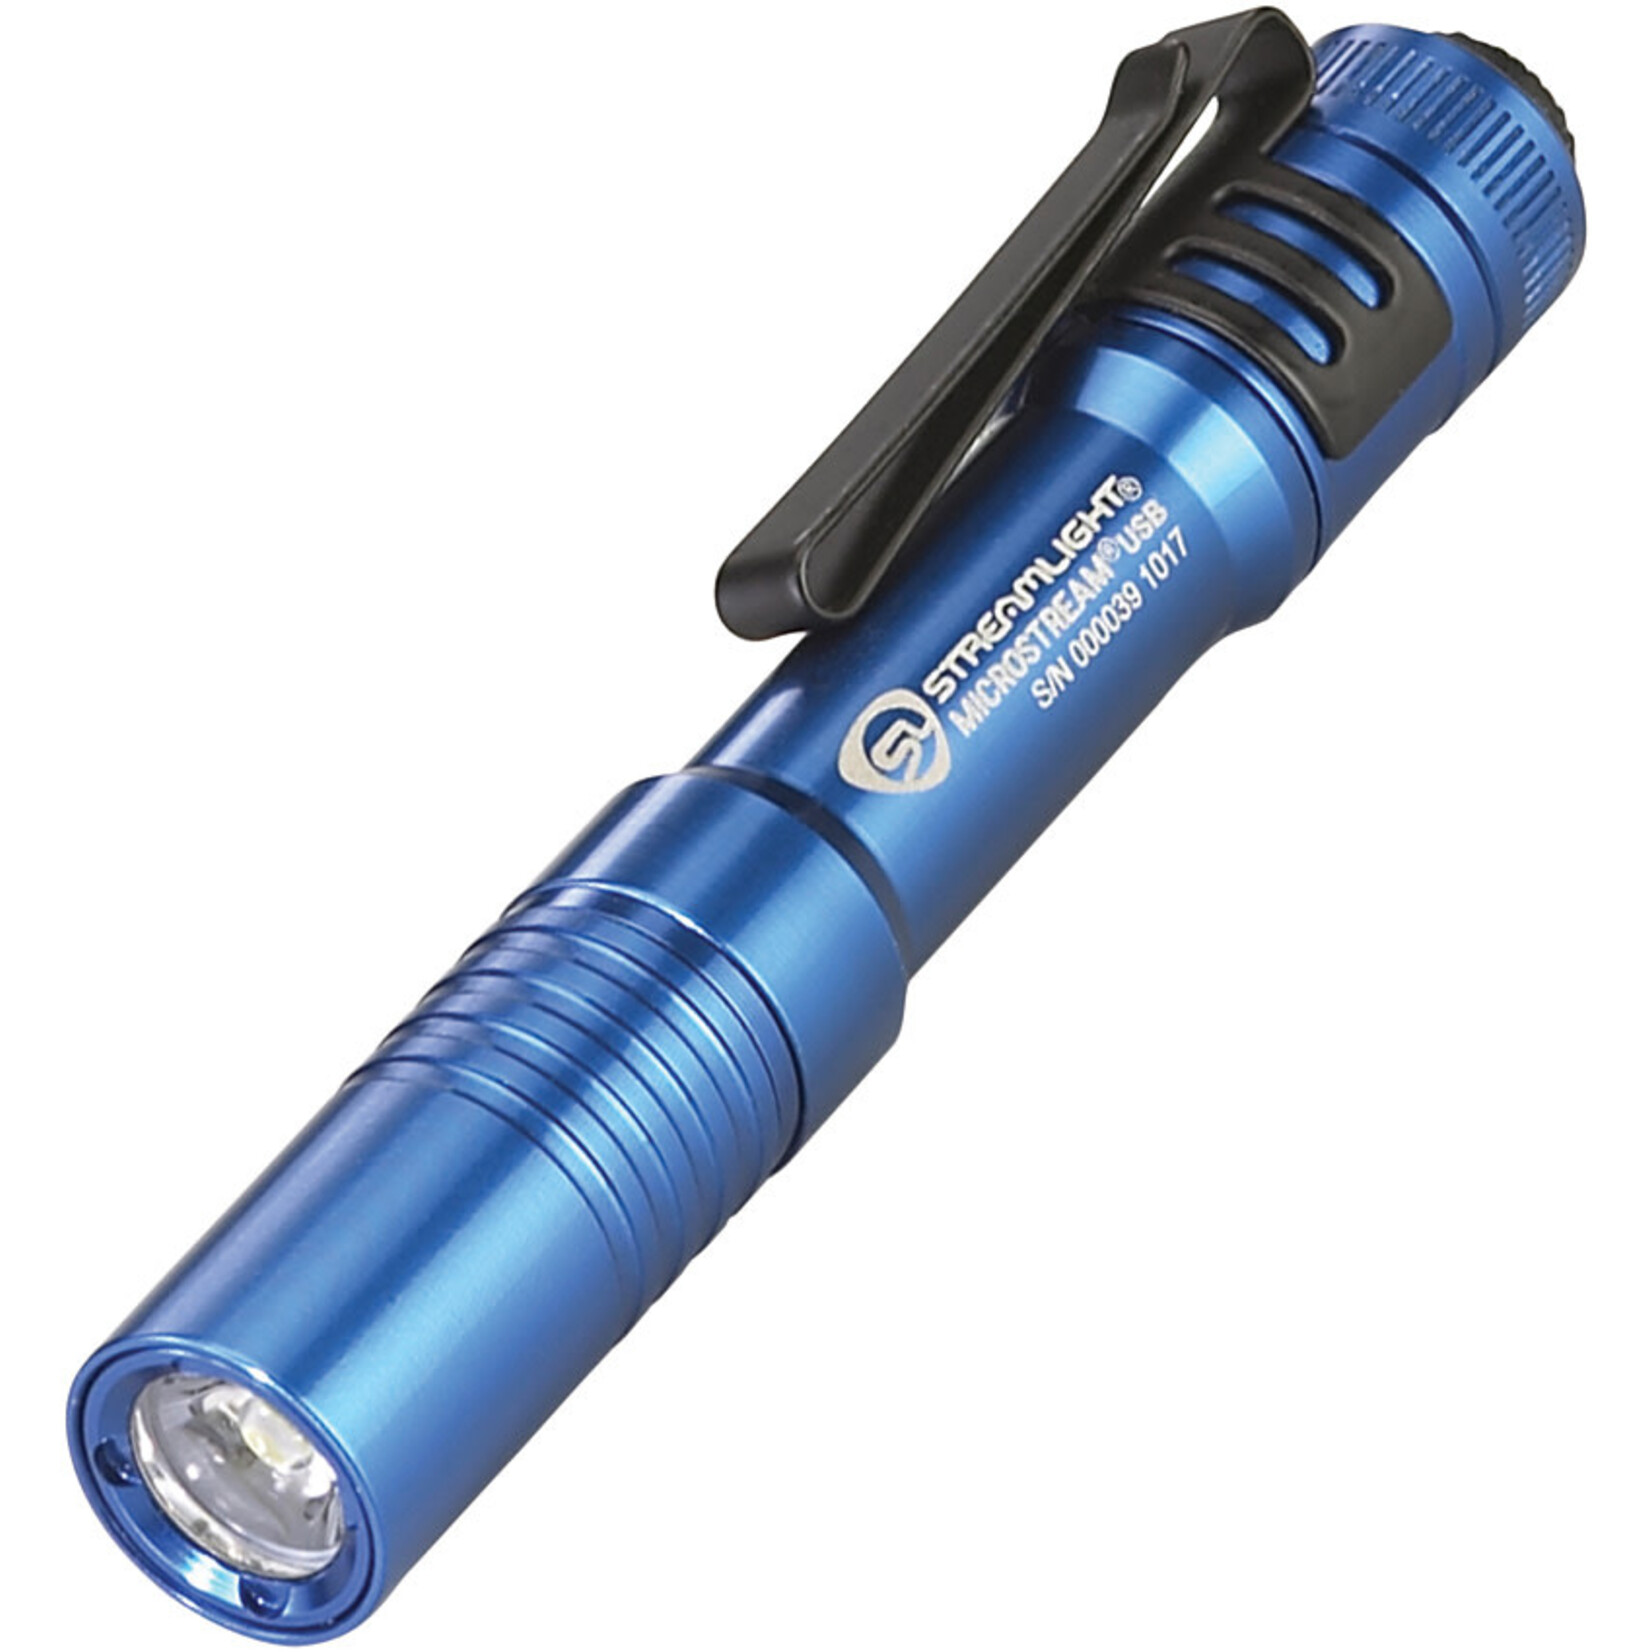 Streamlight Micro Stream USB Flashlight